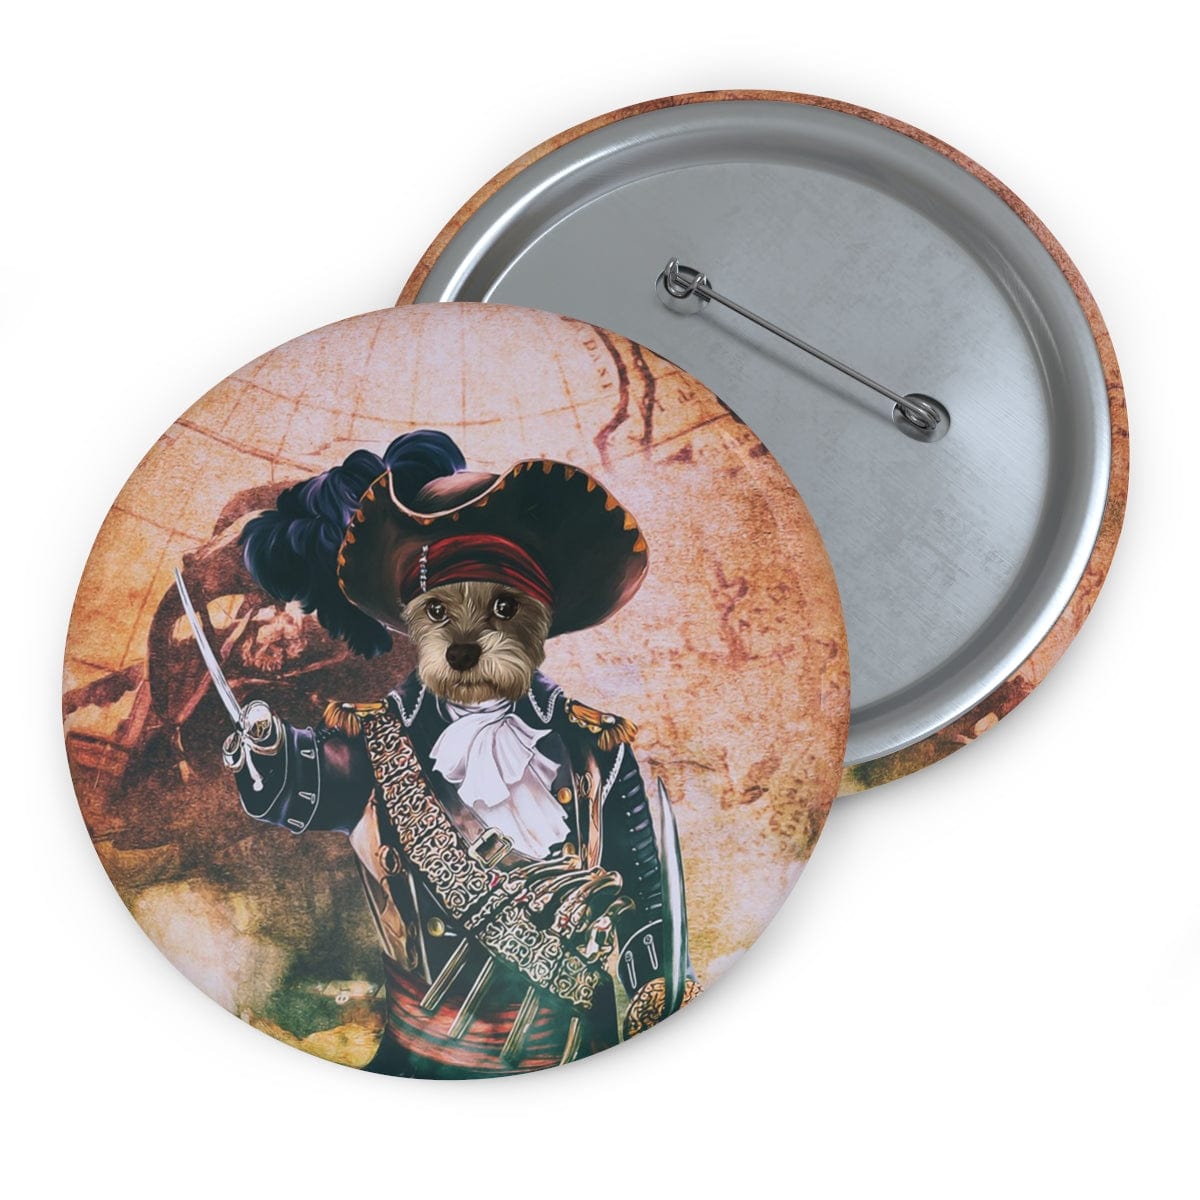 The Pirate Custom Pin